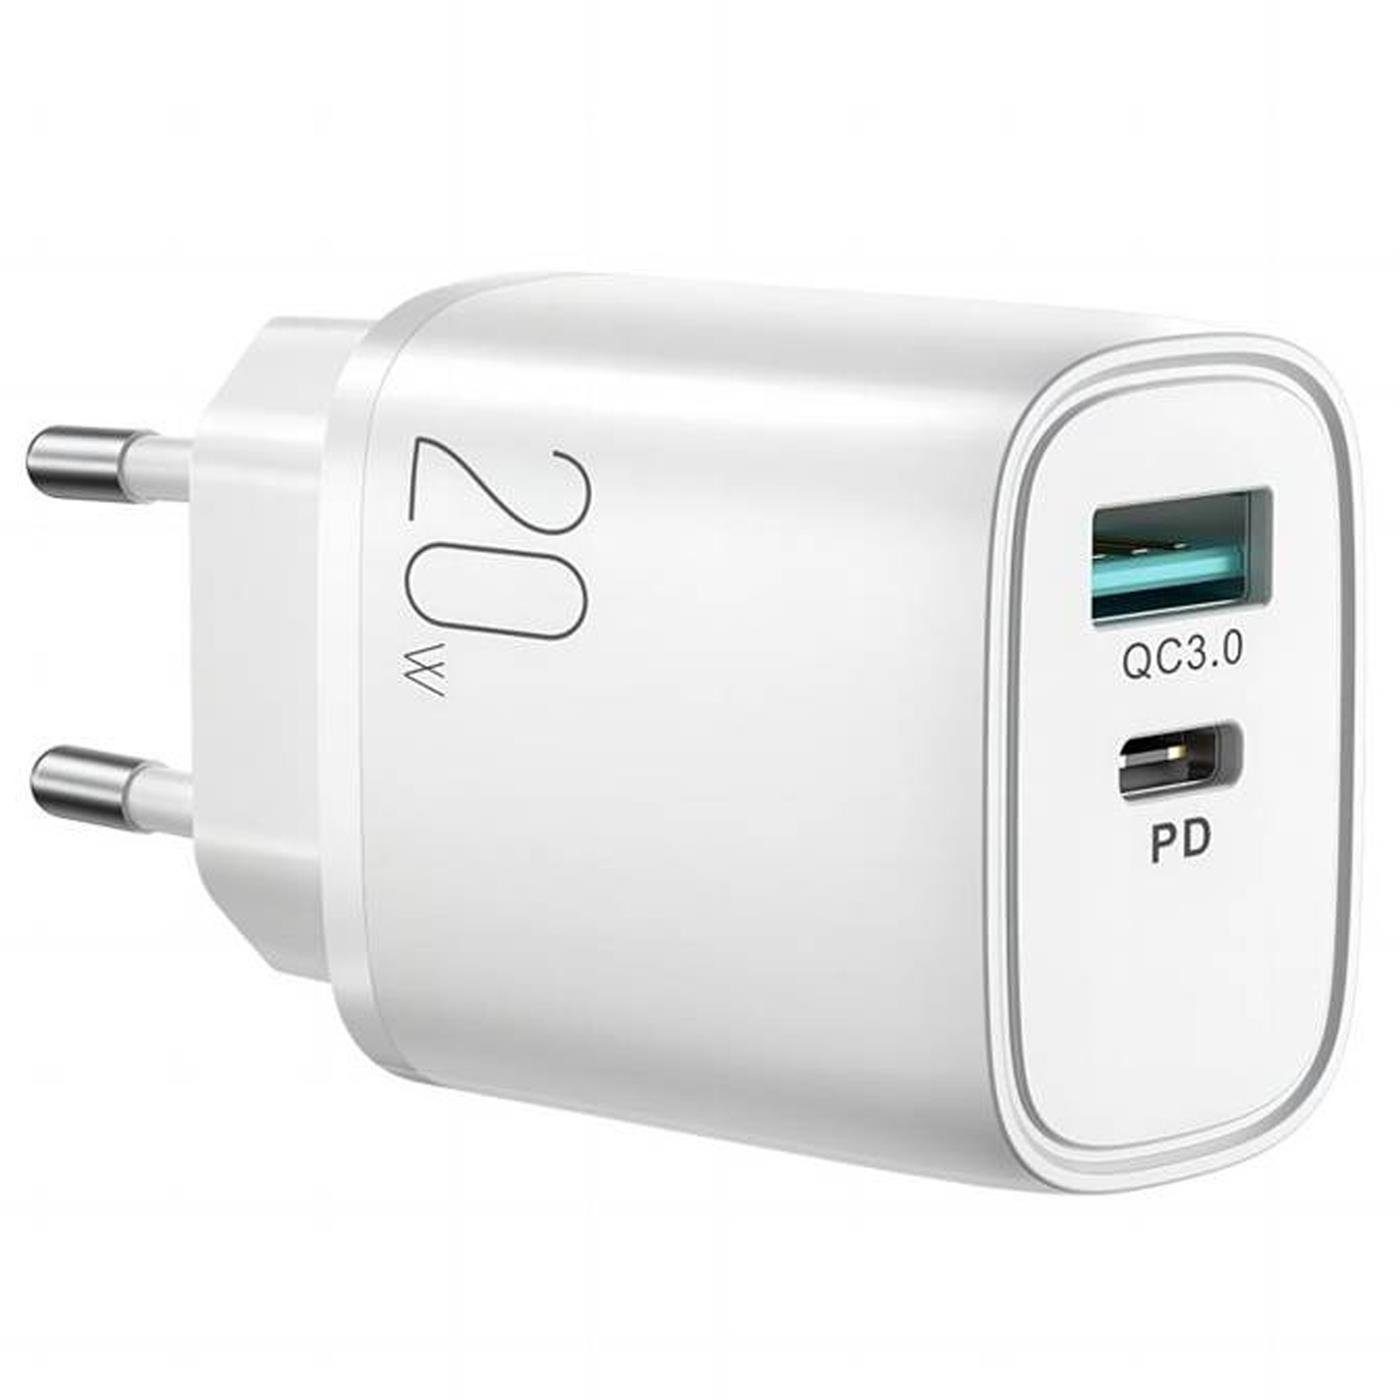 JOYROOM L-QP2011 Smartphone-Ladegerät (3500 mA, EU Netz Lade Stecker Ladegerät Charger USB A C Dual Charge)